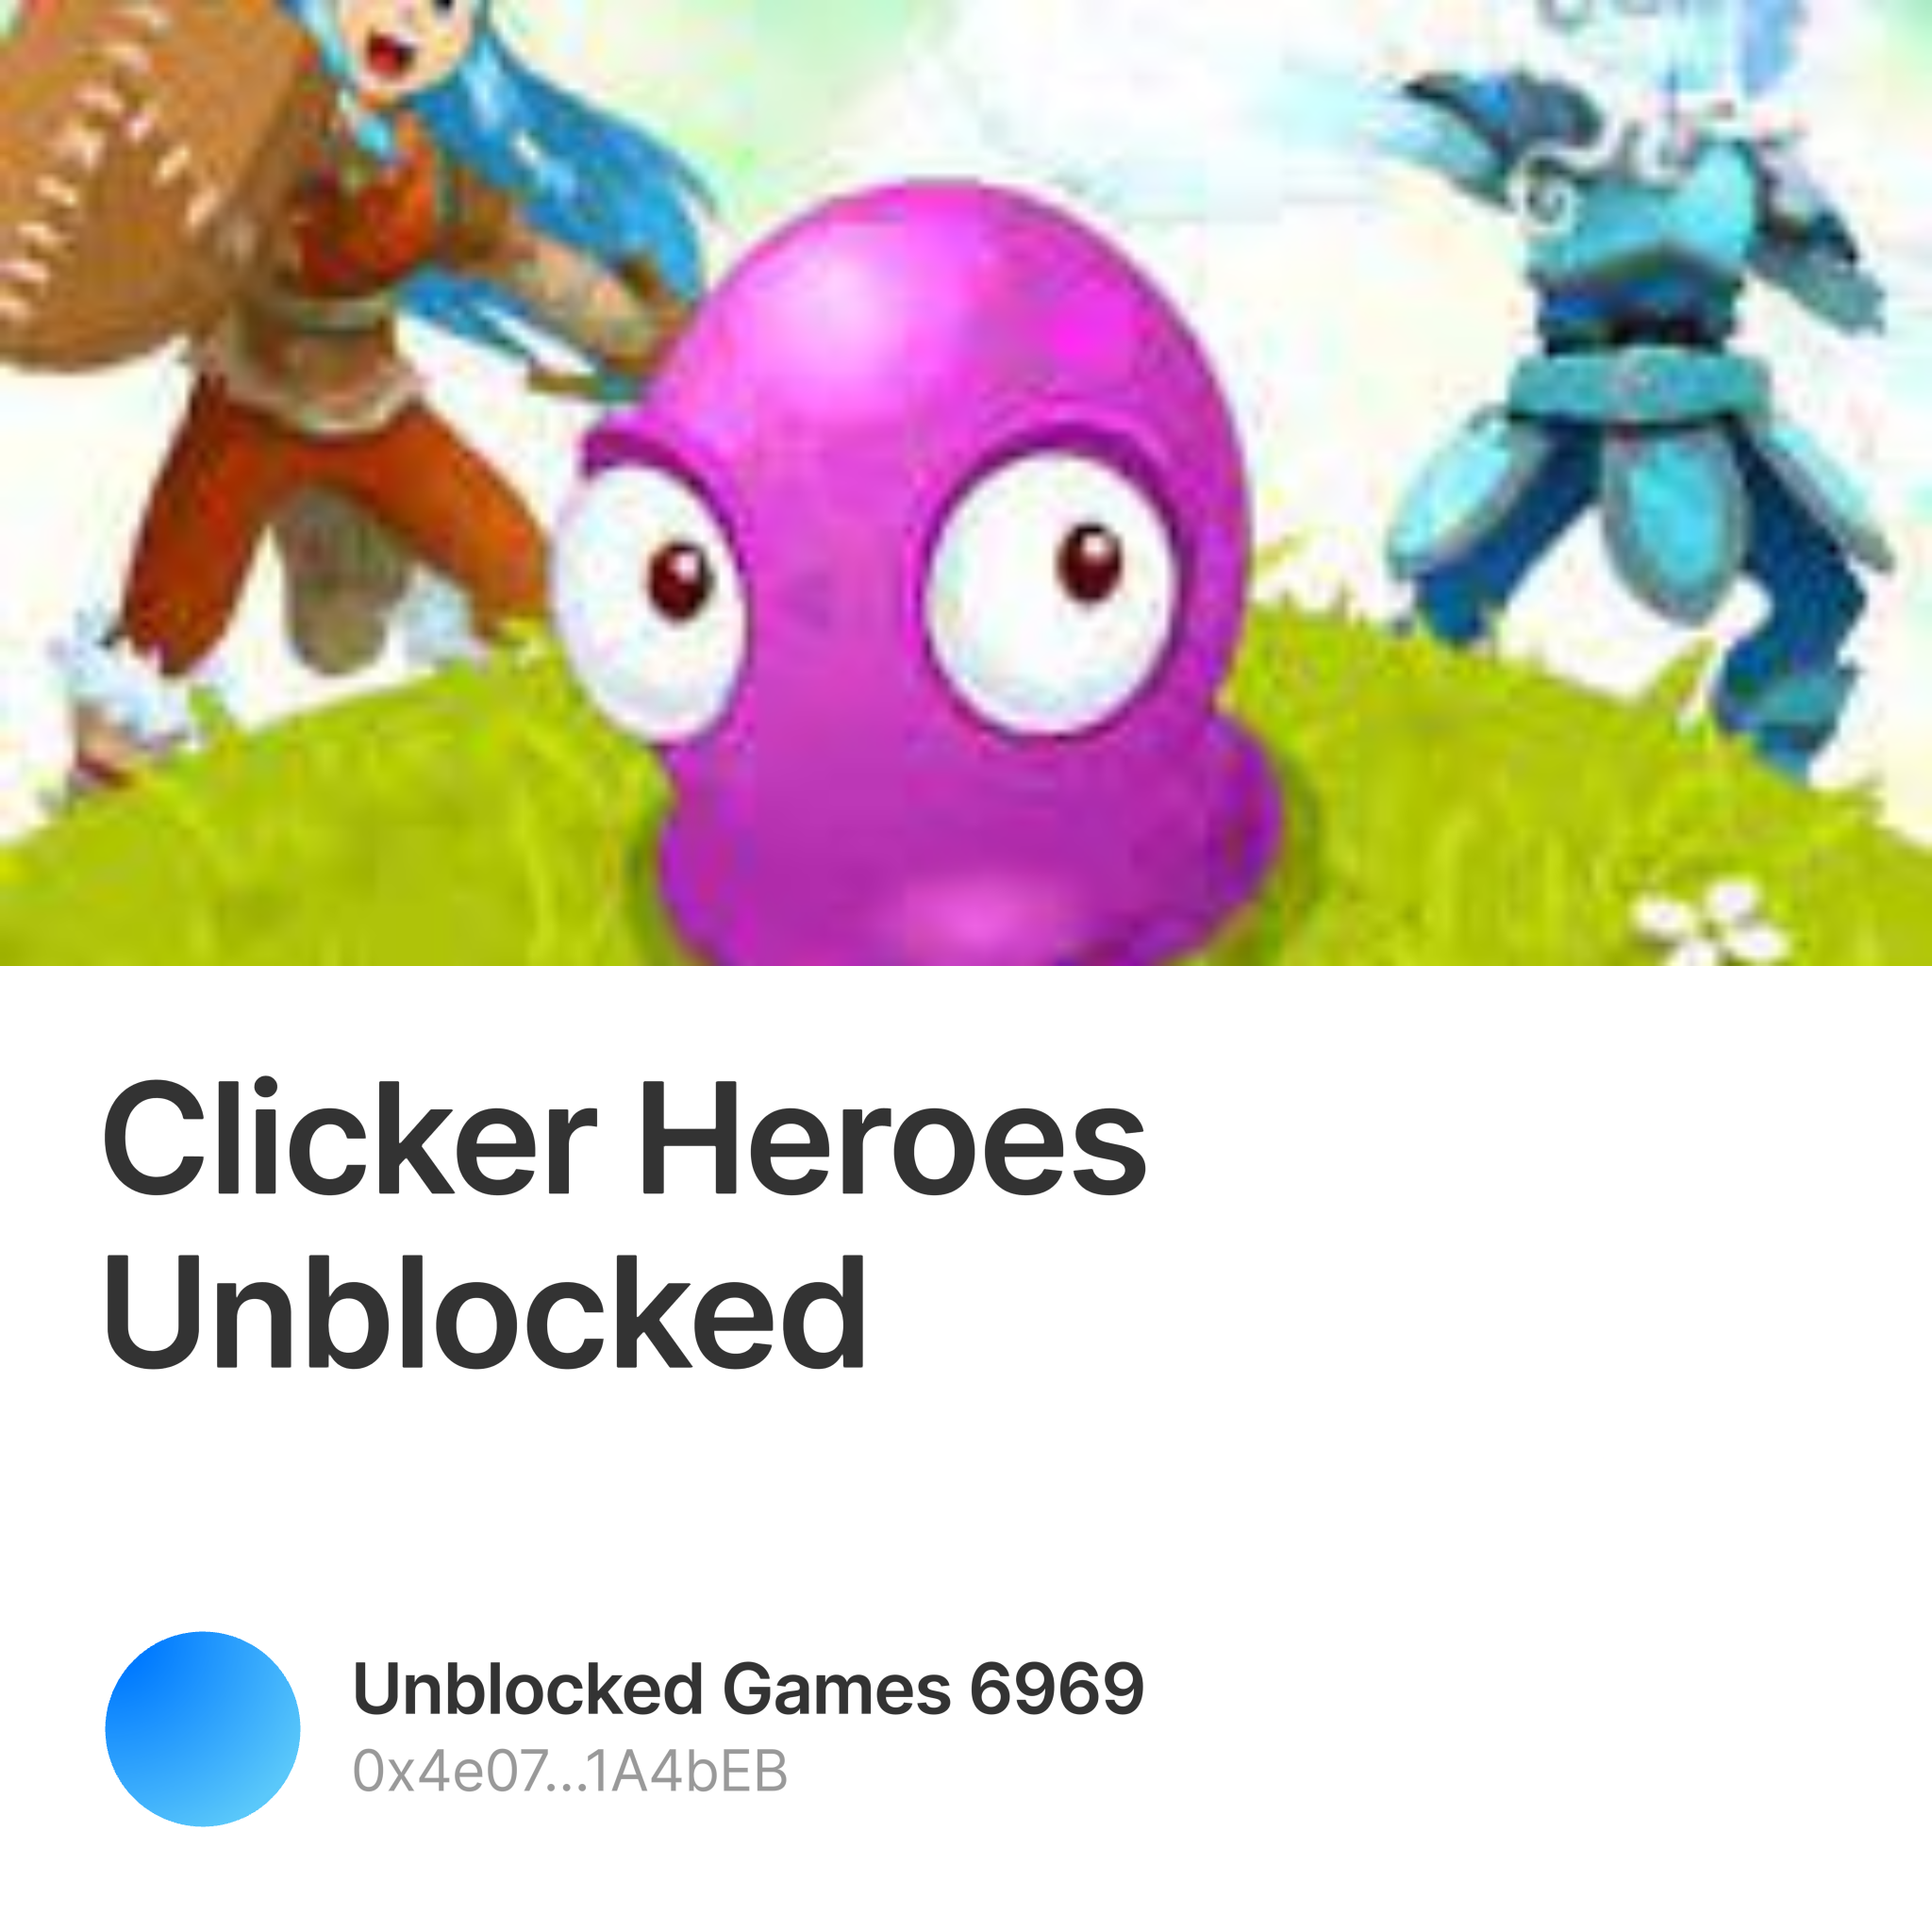 Clicker Heroes Unblocked — Unblocked Games 6969